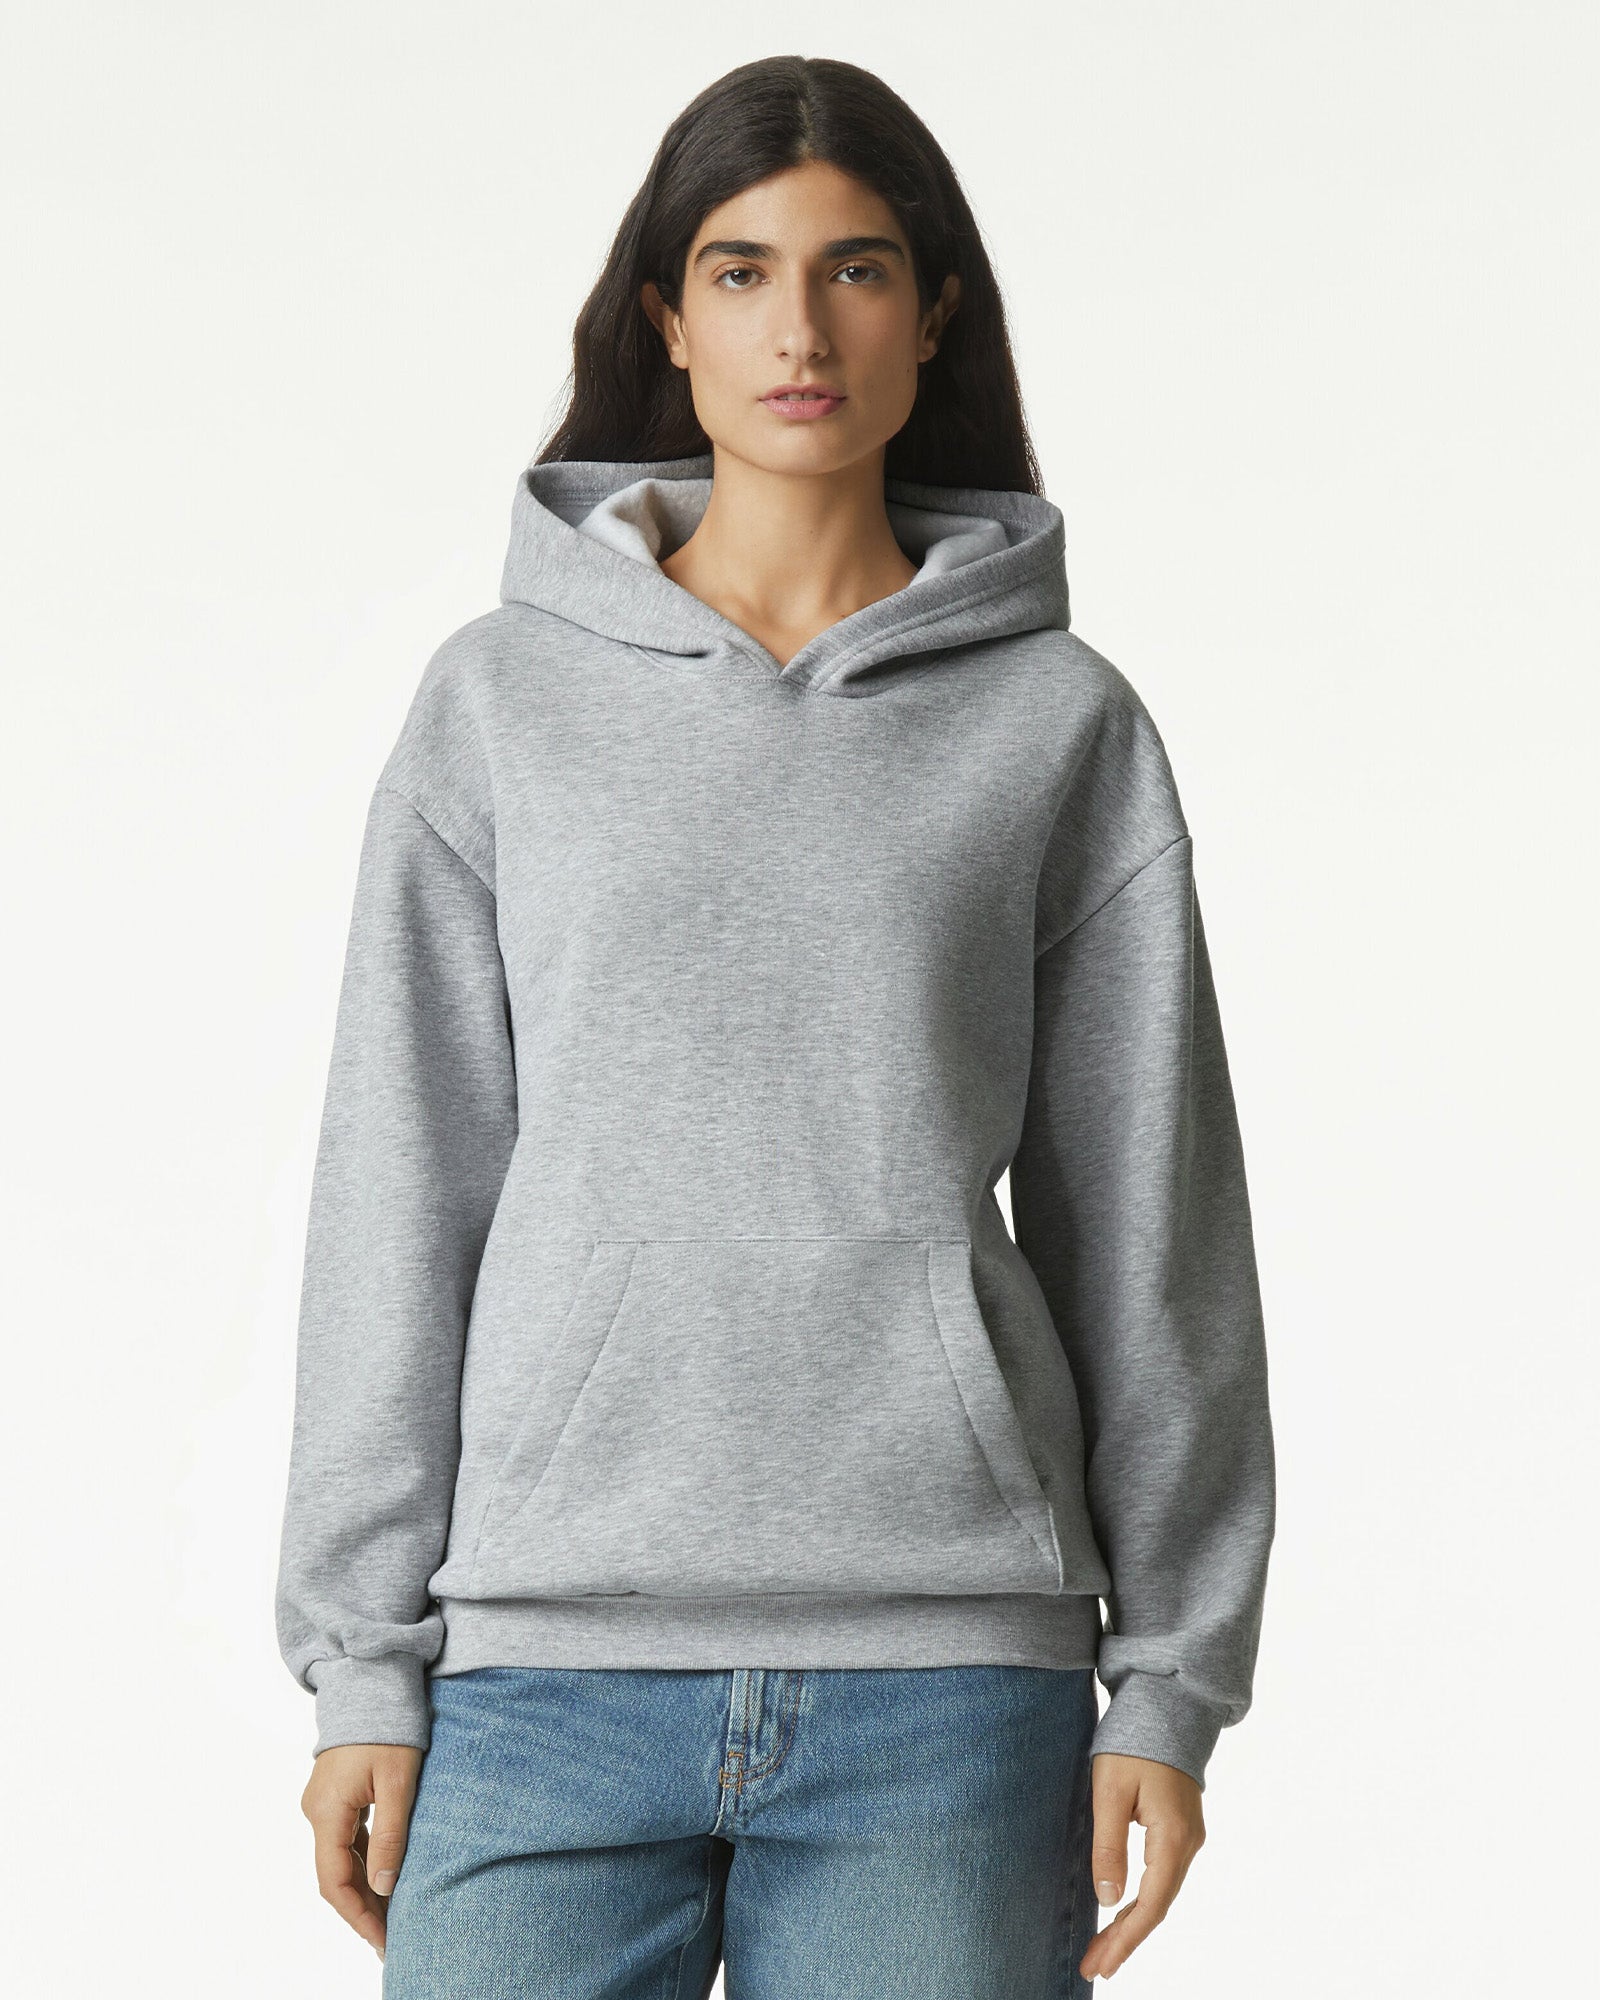 Reflex Unisex Hooded Sweatshirt - Heather Grey